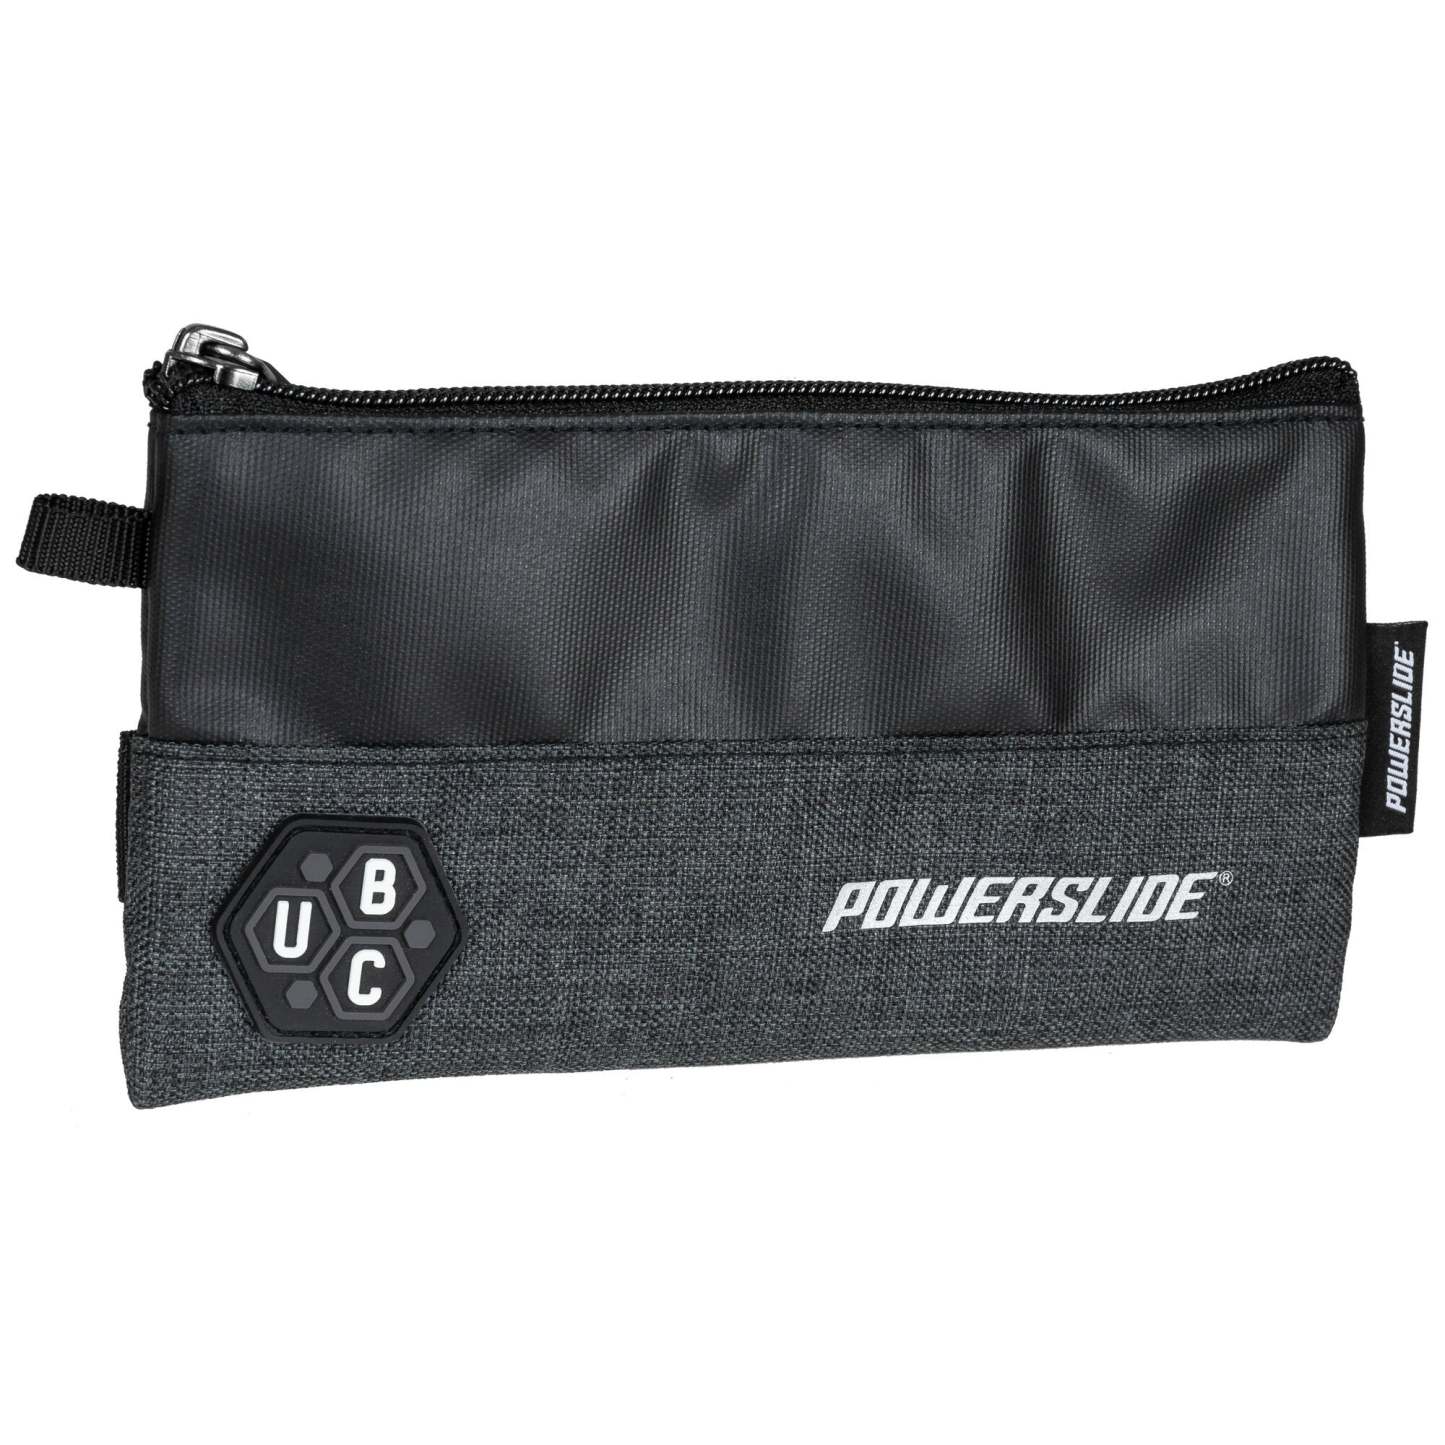 POWERSLIDE - UBC Phone Pocket